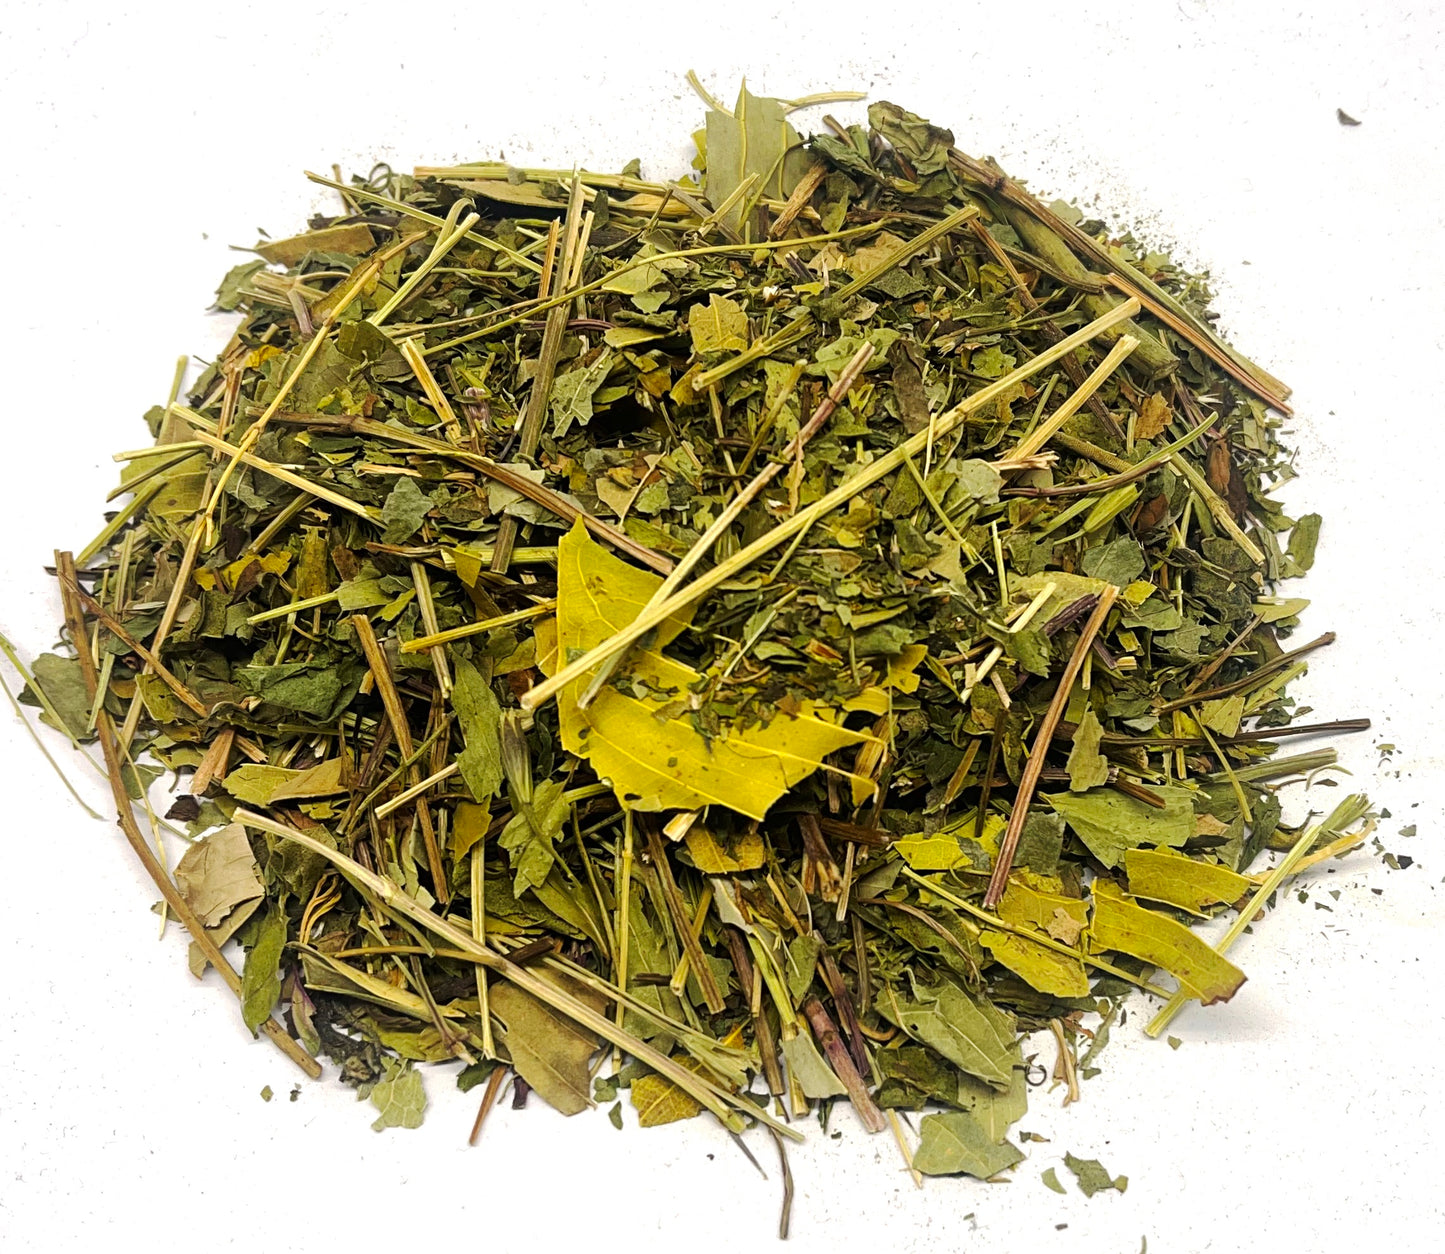 Antiparasitario Herbal Infusion Tea Value Pack